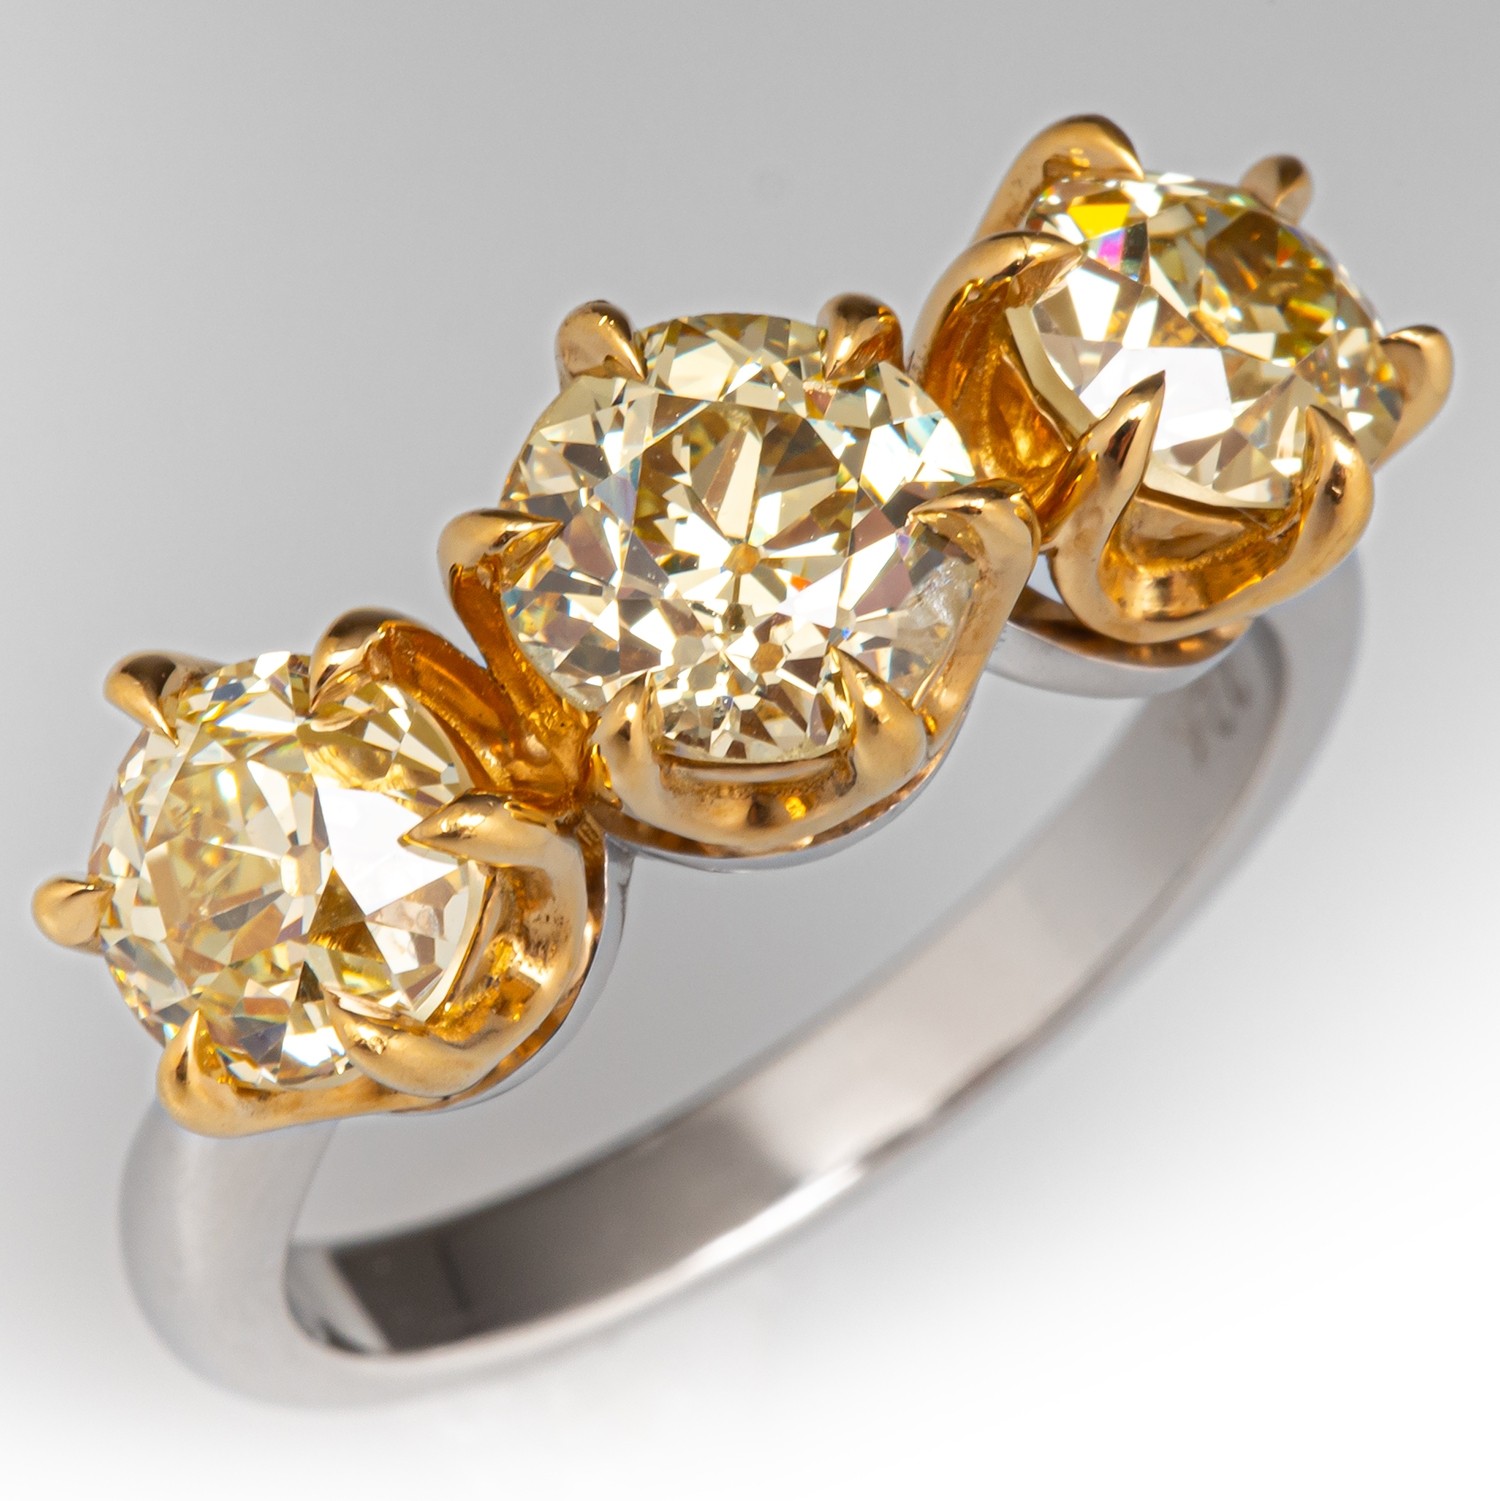 Buy 22K Men CZ Gold Ring VGR678 Online from Vaibhav Jewellers